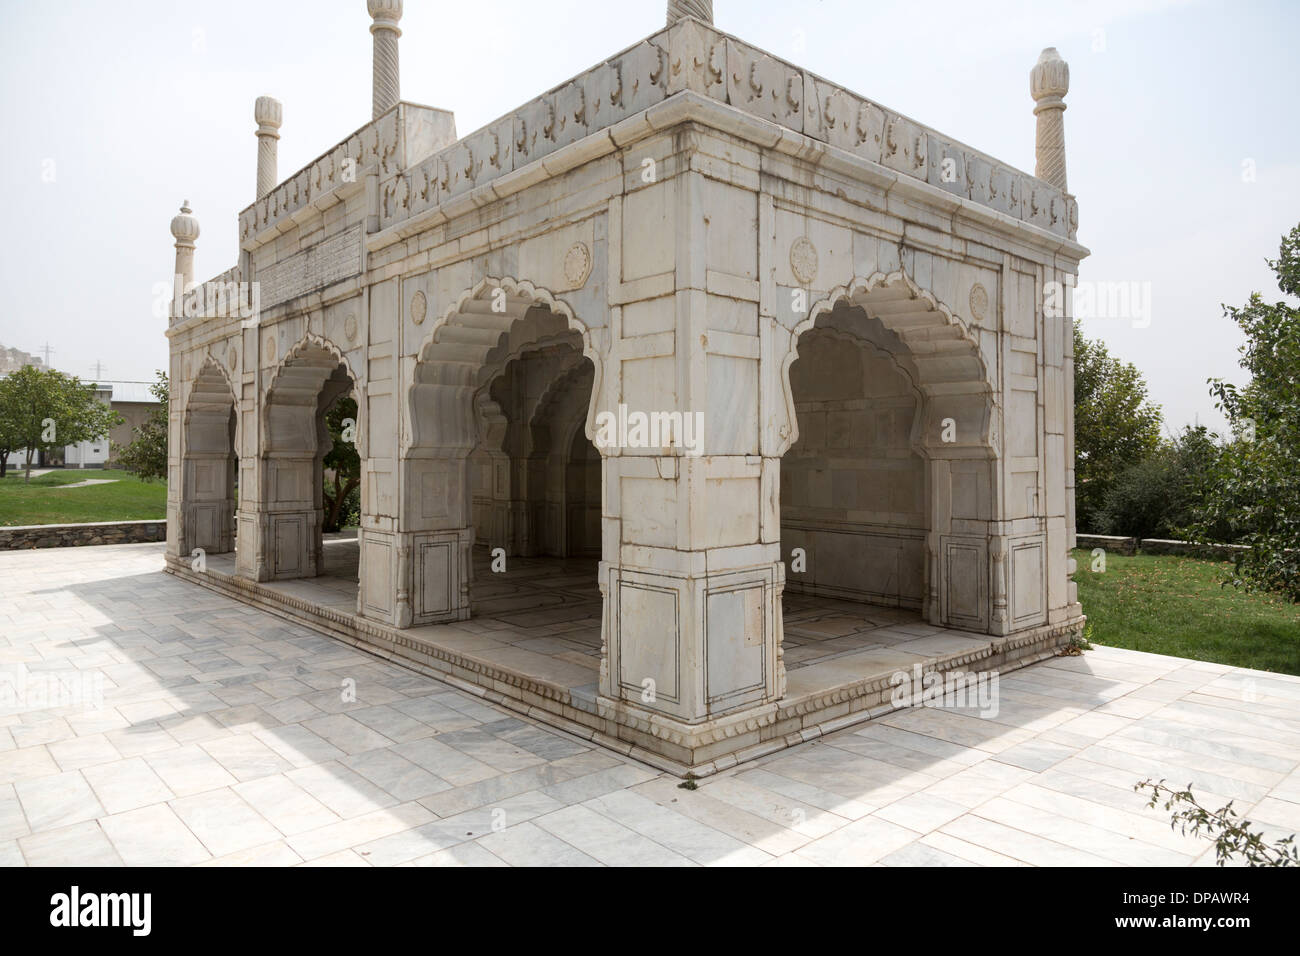 La moschea di Shah Jahan in giardini di Babur, localmente denominata Bagh-e Babur, un parco storico a Kabul, Afghanistan. Foto Stock